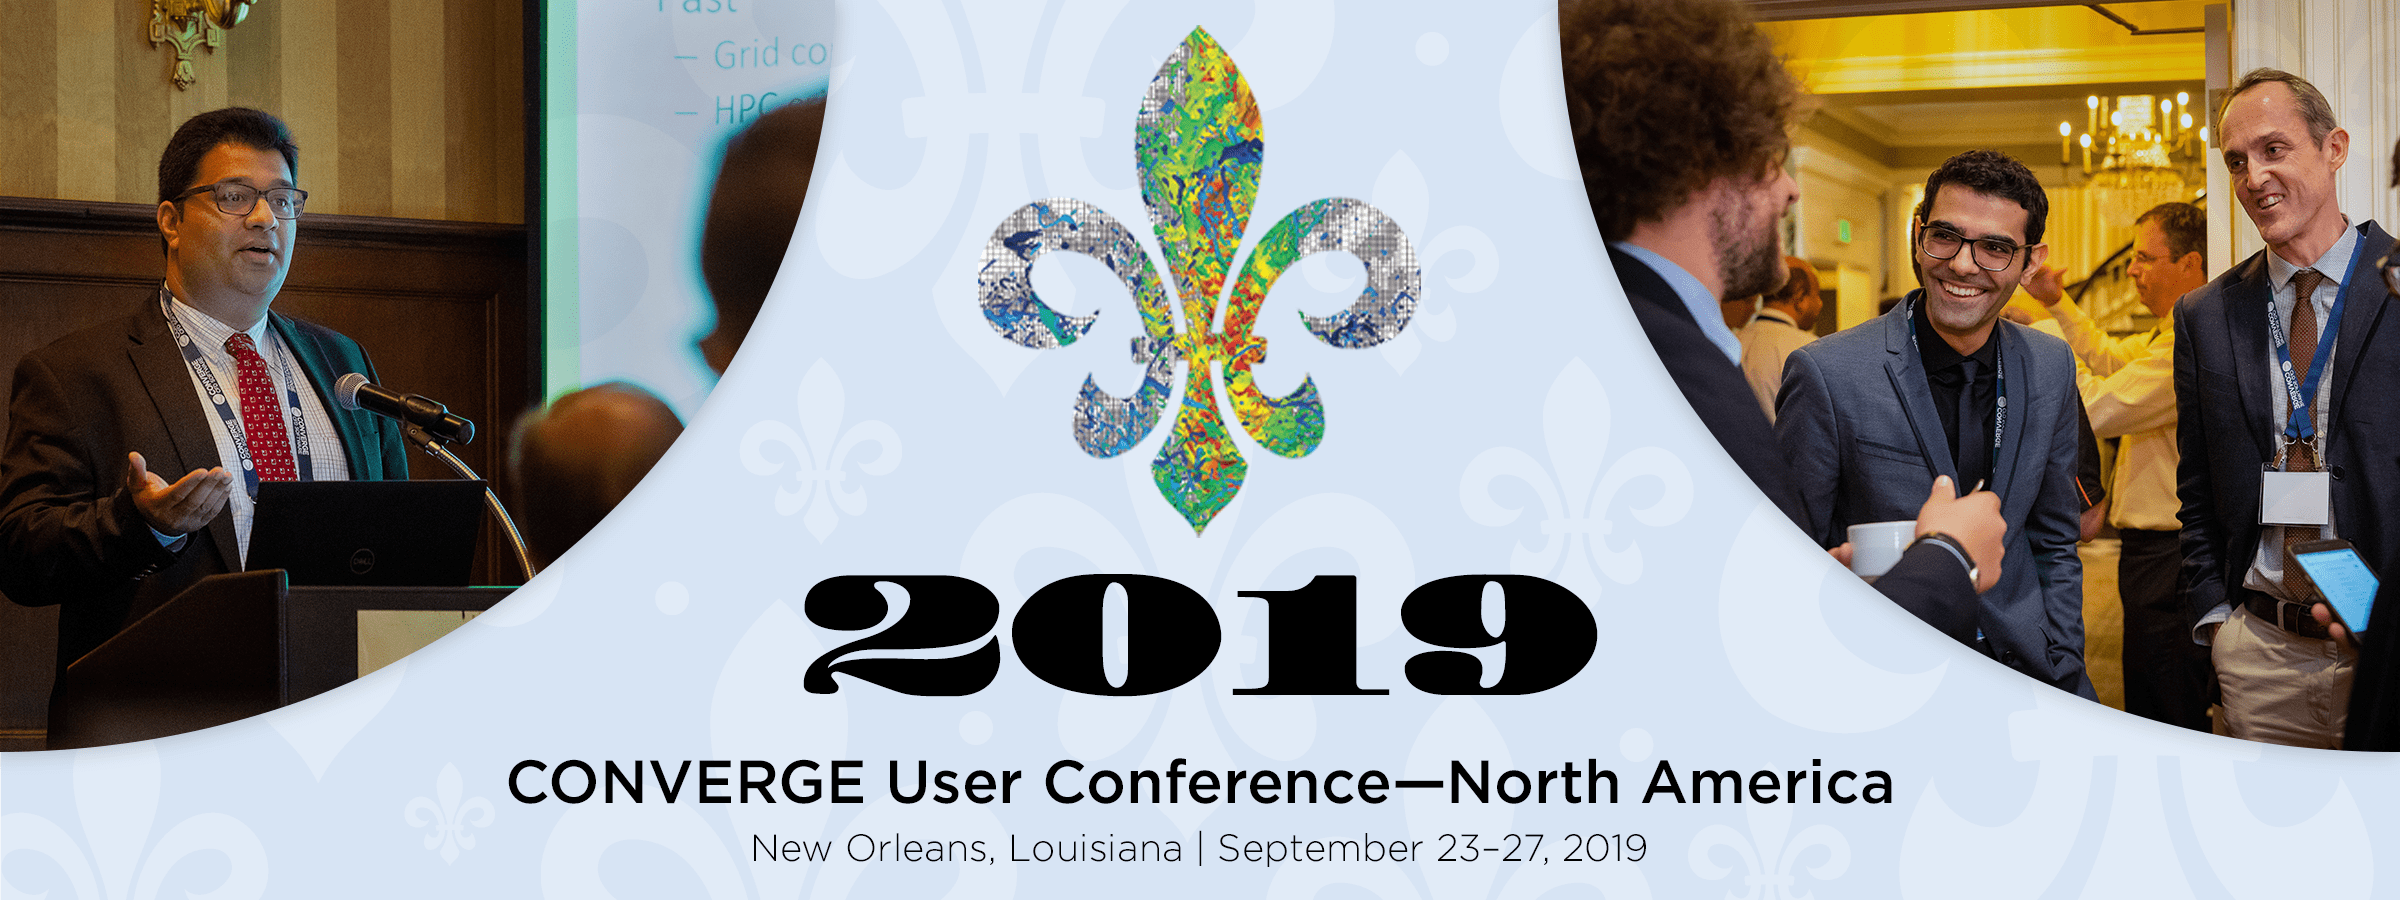 2019 CONVERGE User Conference—North America